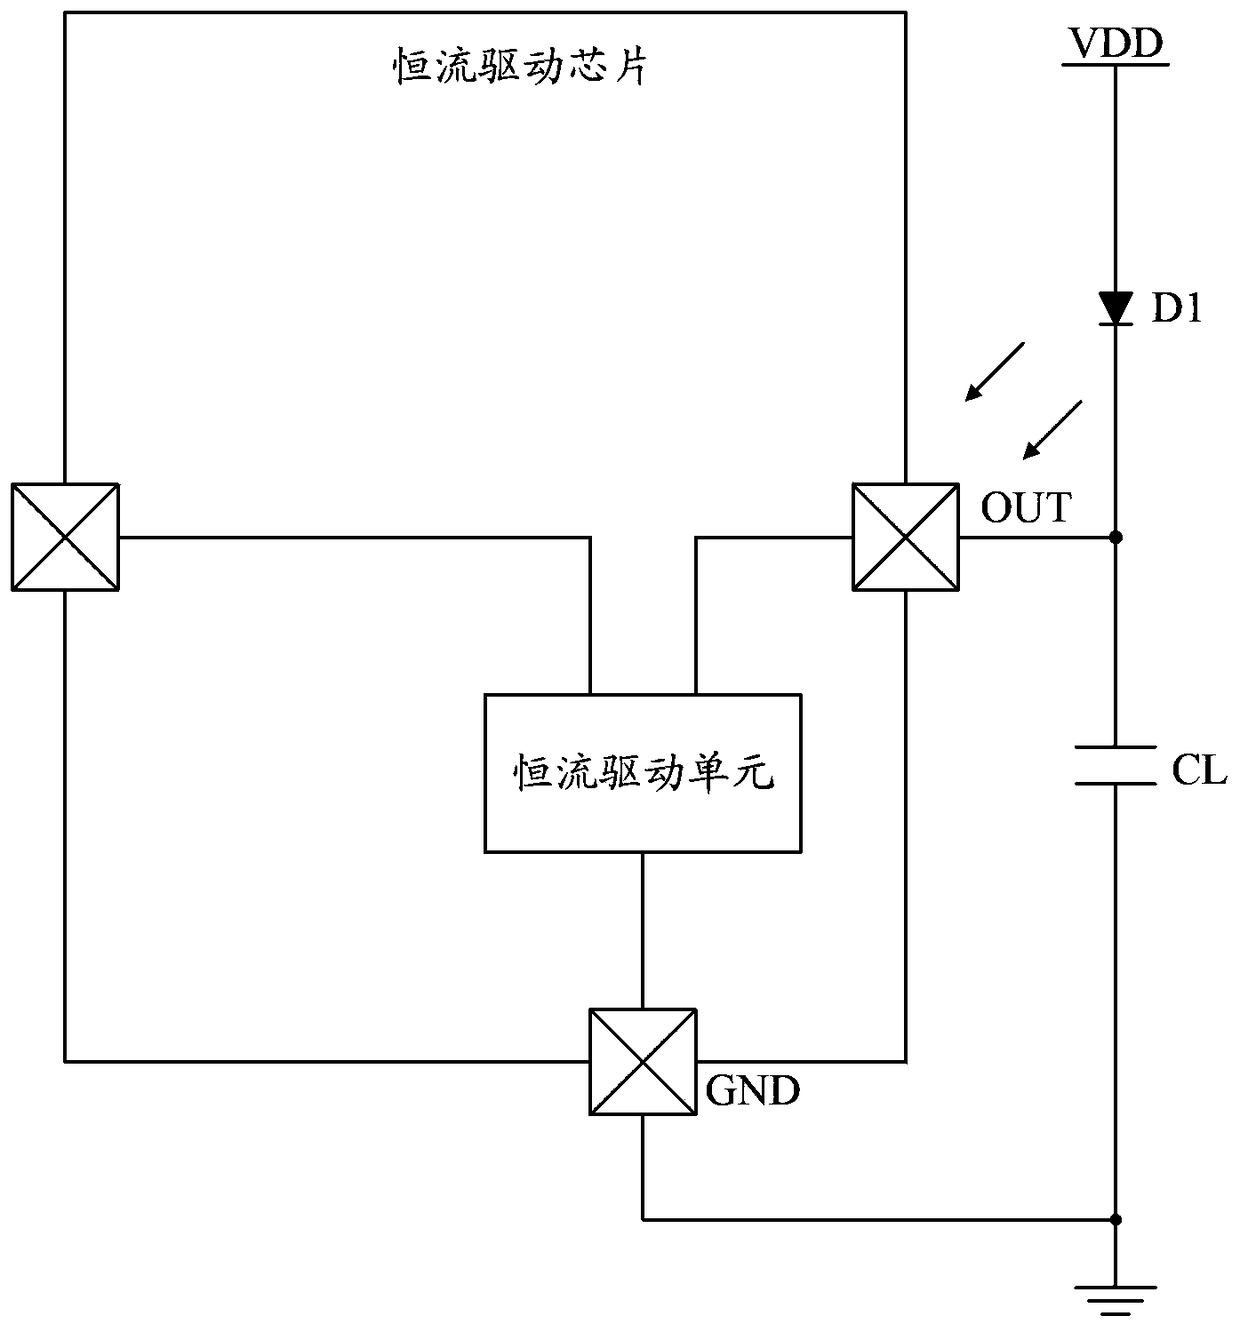 A constant current drive circuit